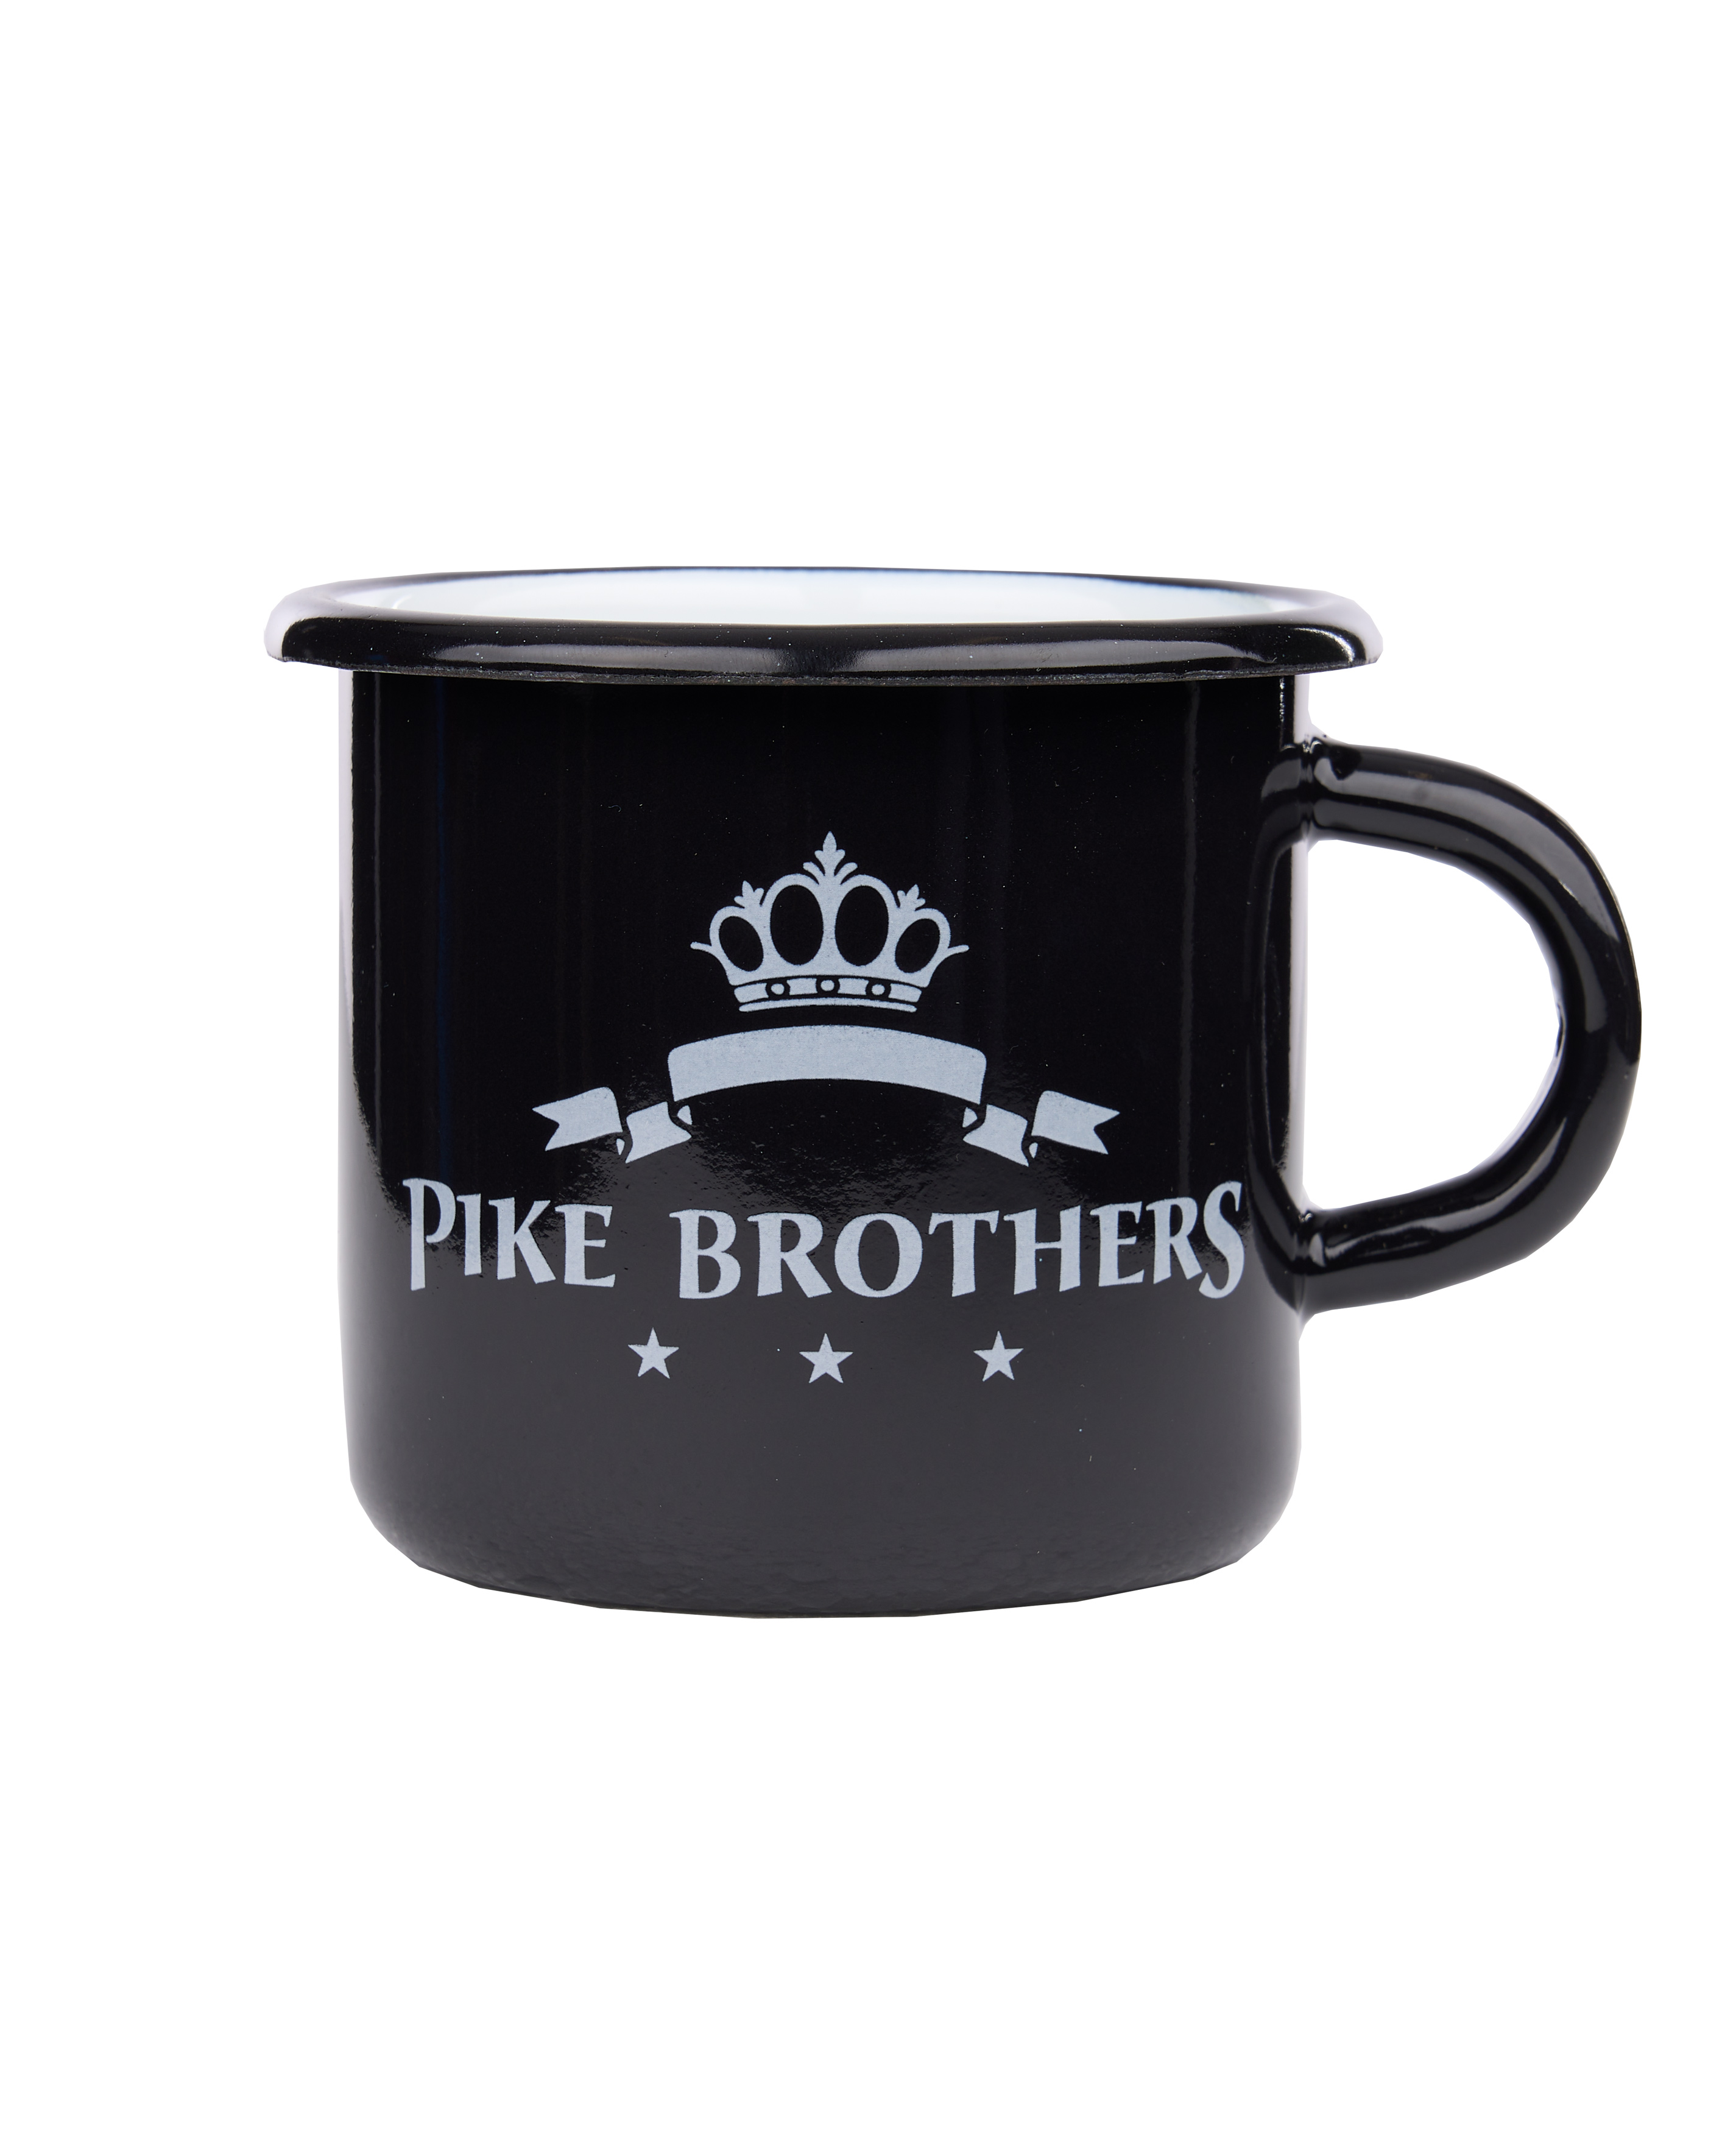 1951 Pike Brothers Enamel Mug black